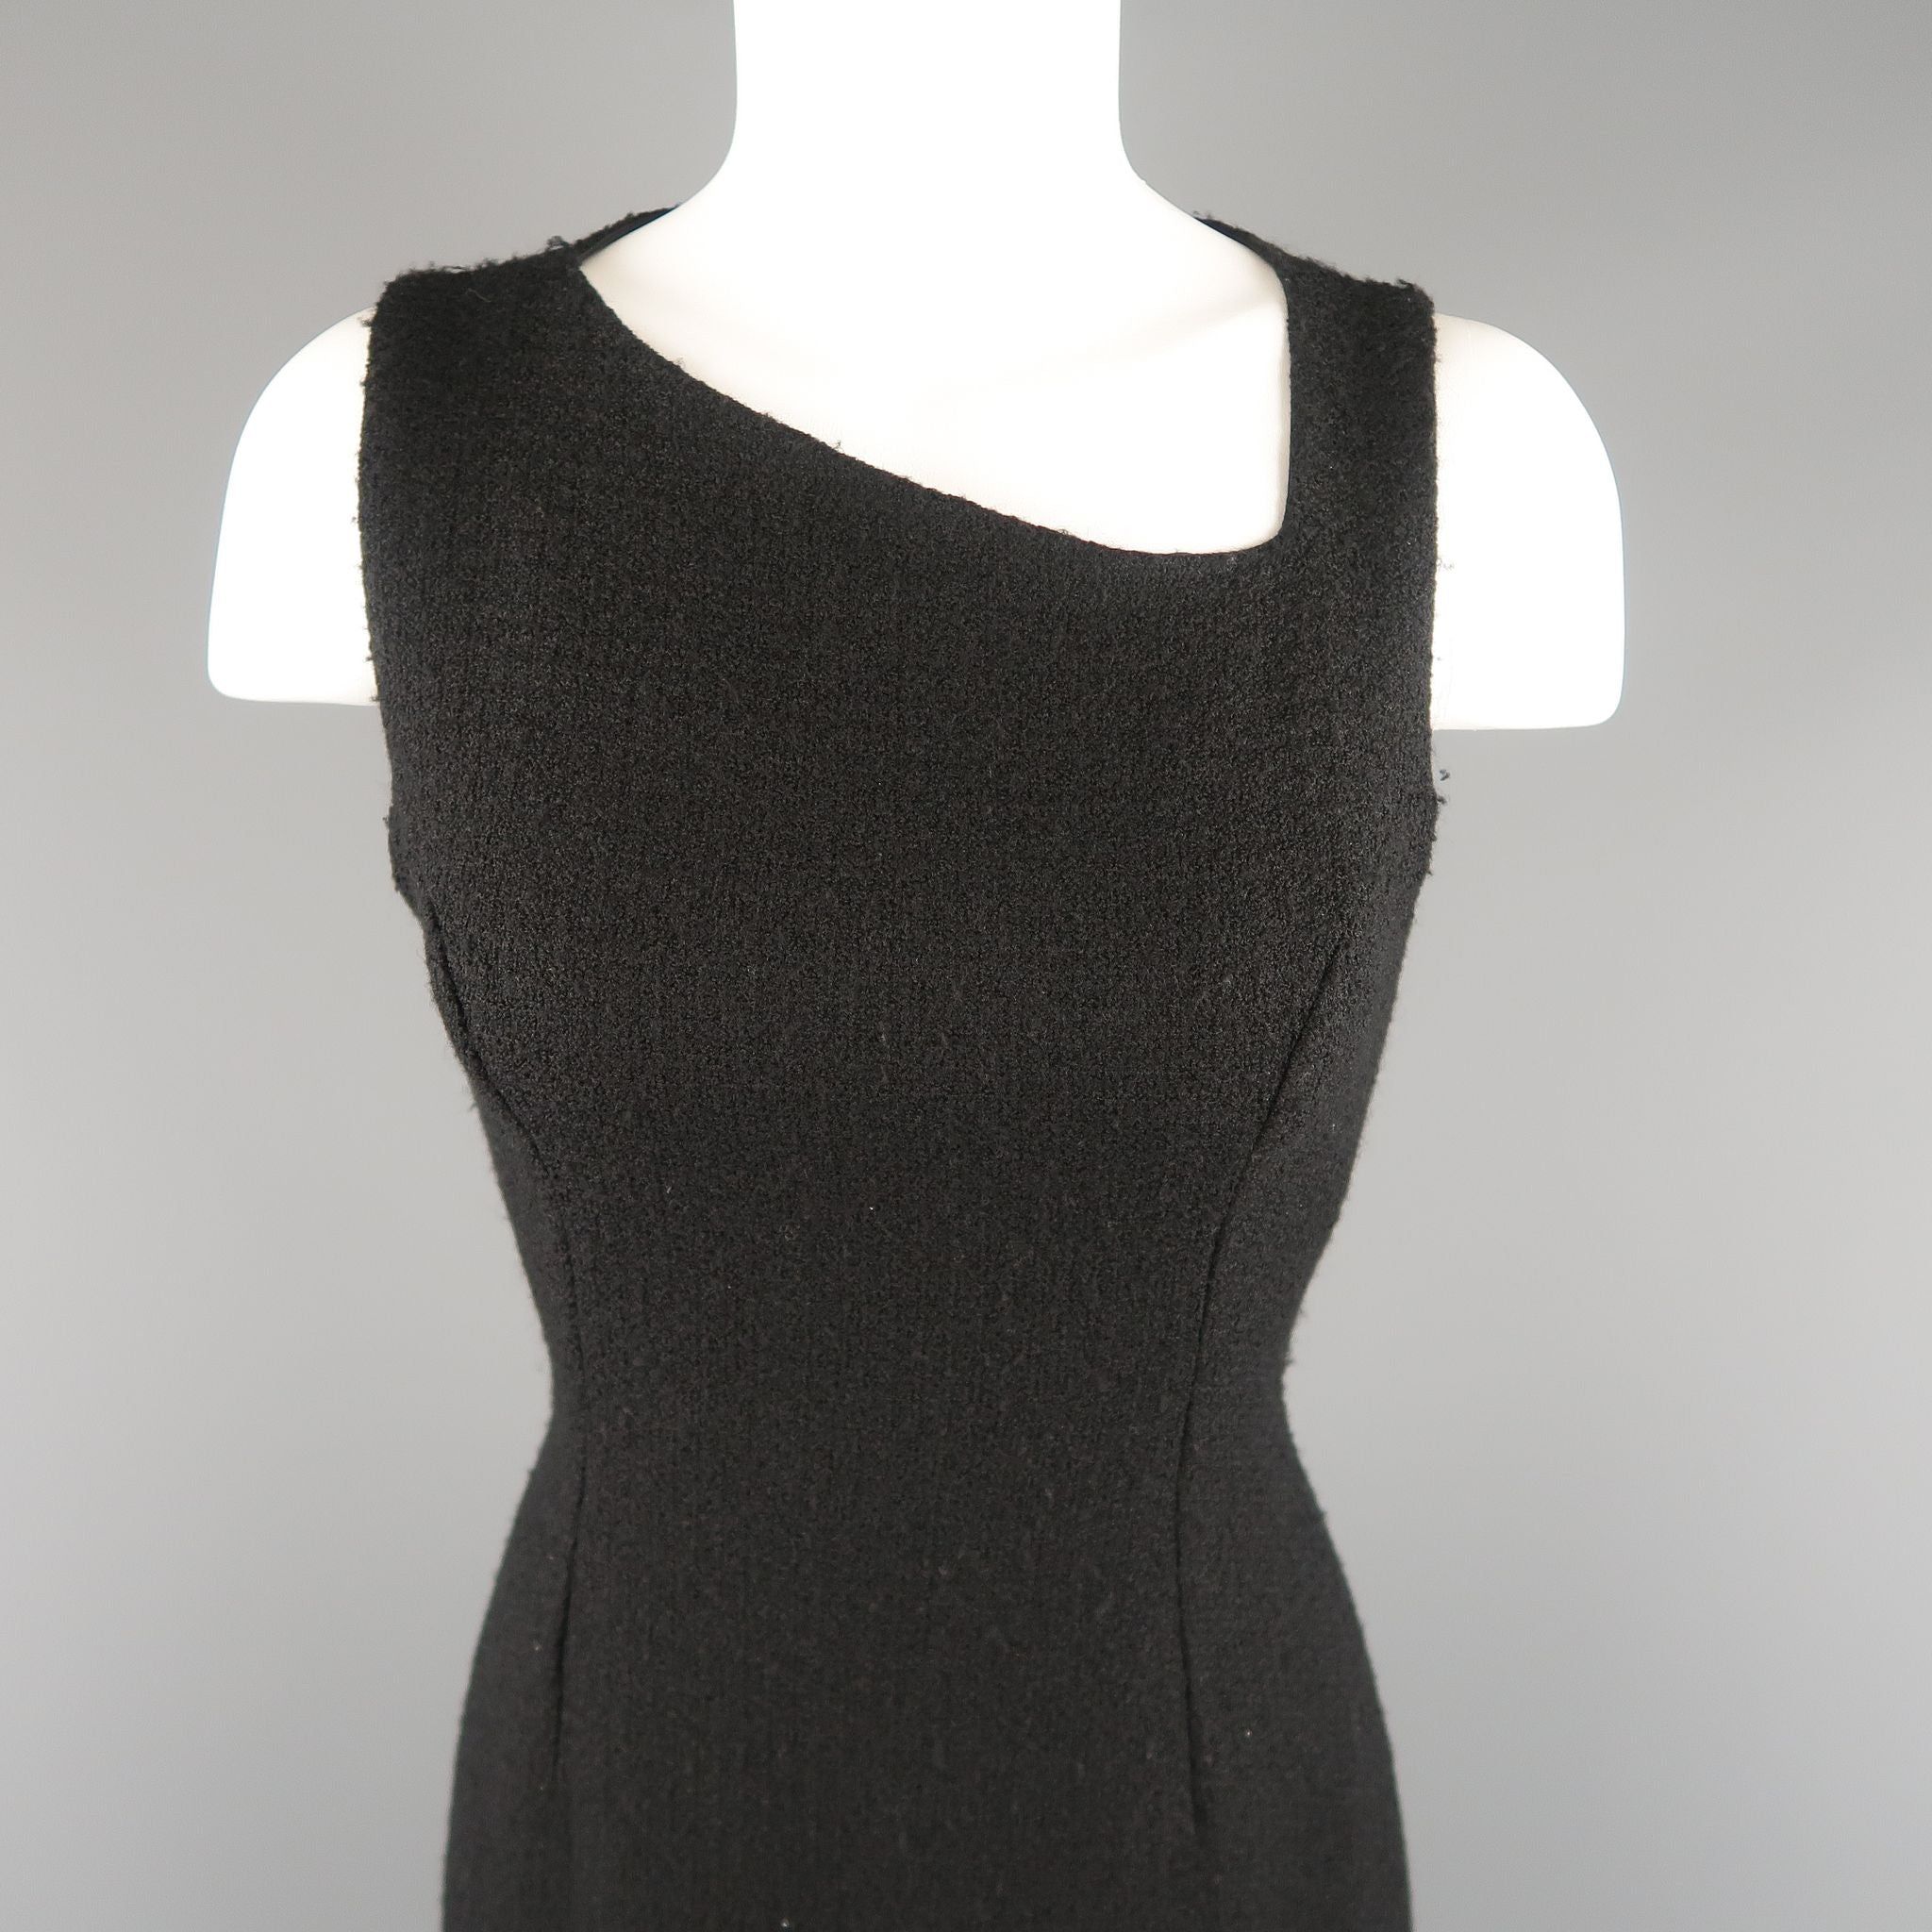 Versace Black Wool Blend Tweed Asymmetrical Dress Size S / US 4 / IT 40 - 2 Preview